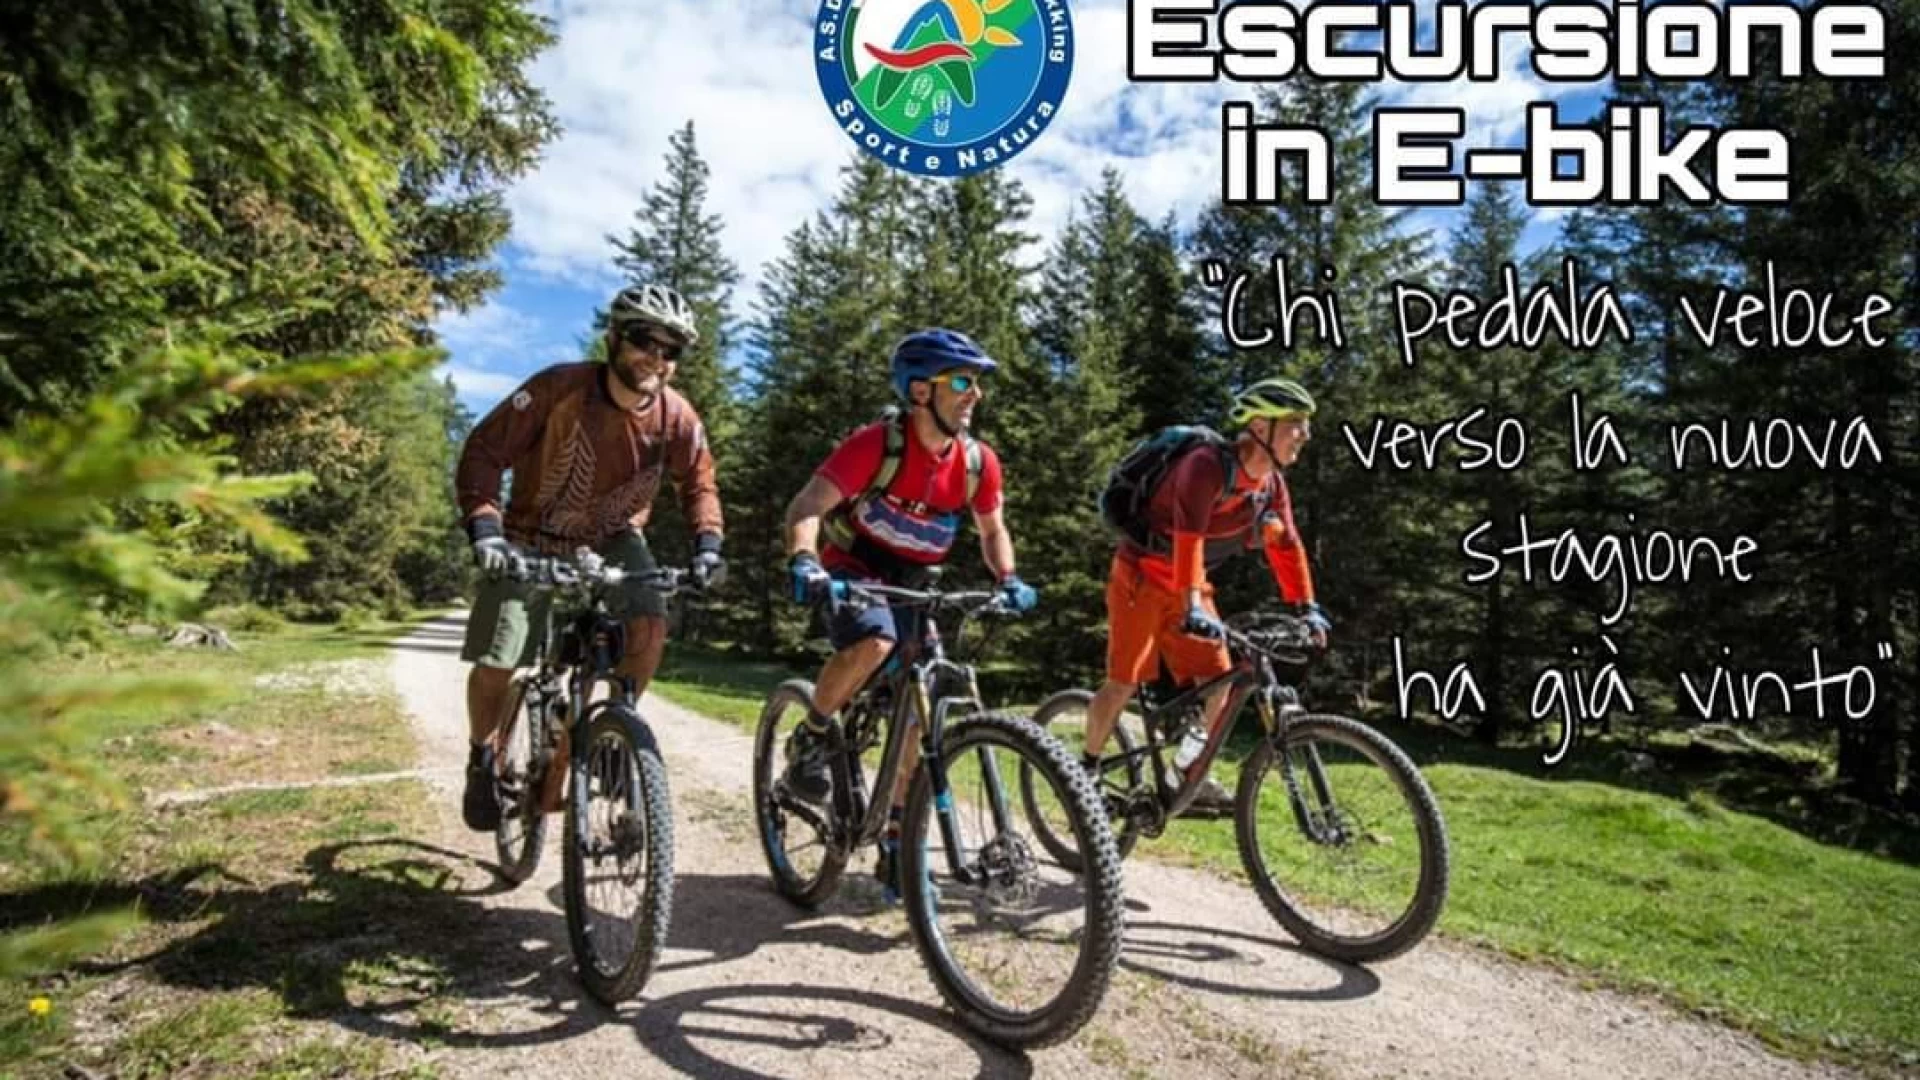 Castel Di Sangro: tour in E-Bike immersi nella natura. Una nuova avventura targata Asd Natural…Mente Trekking.